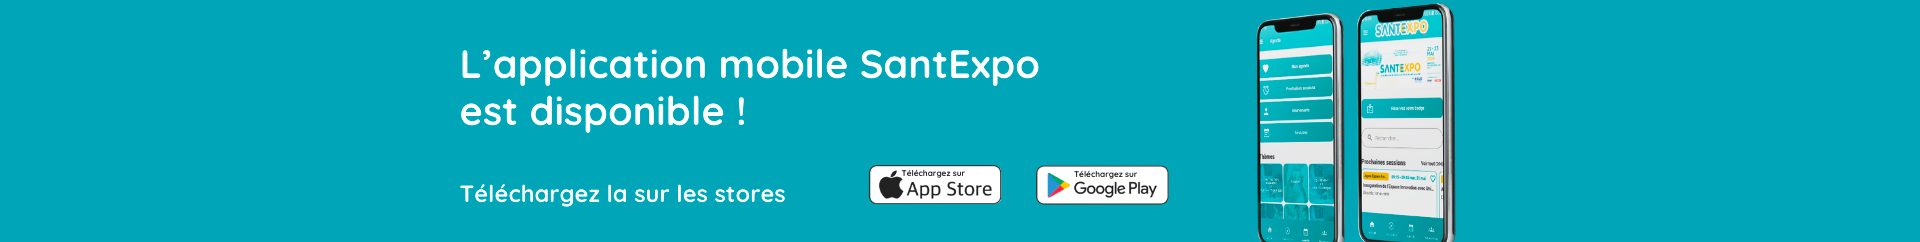 Application mobile SantExpo